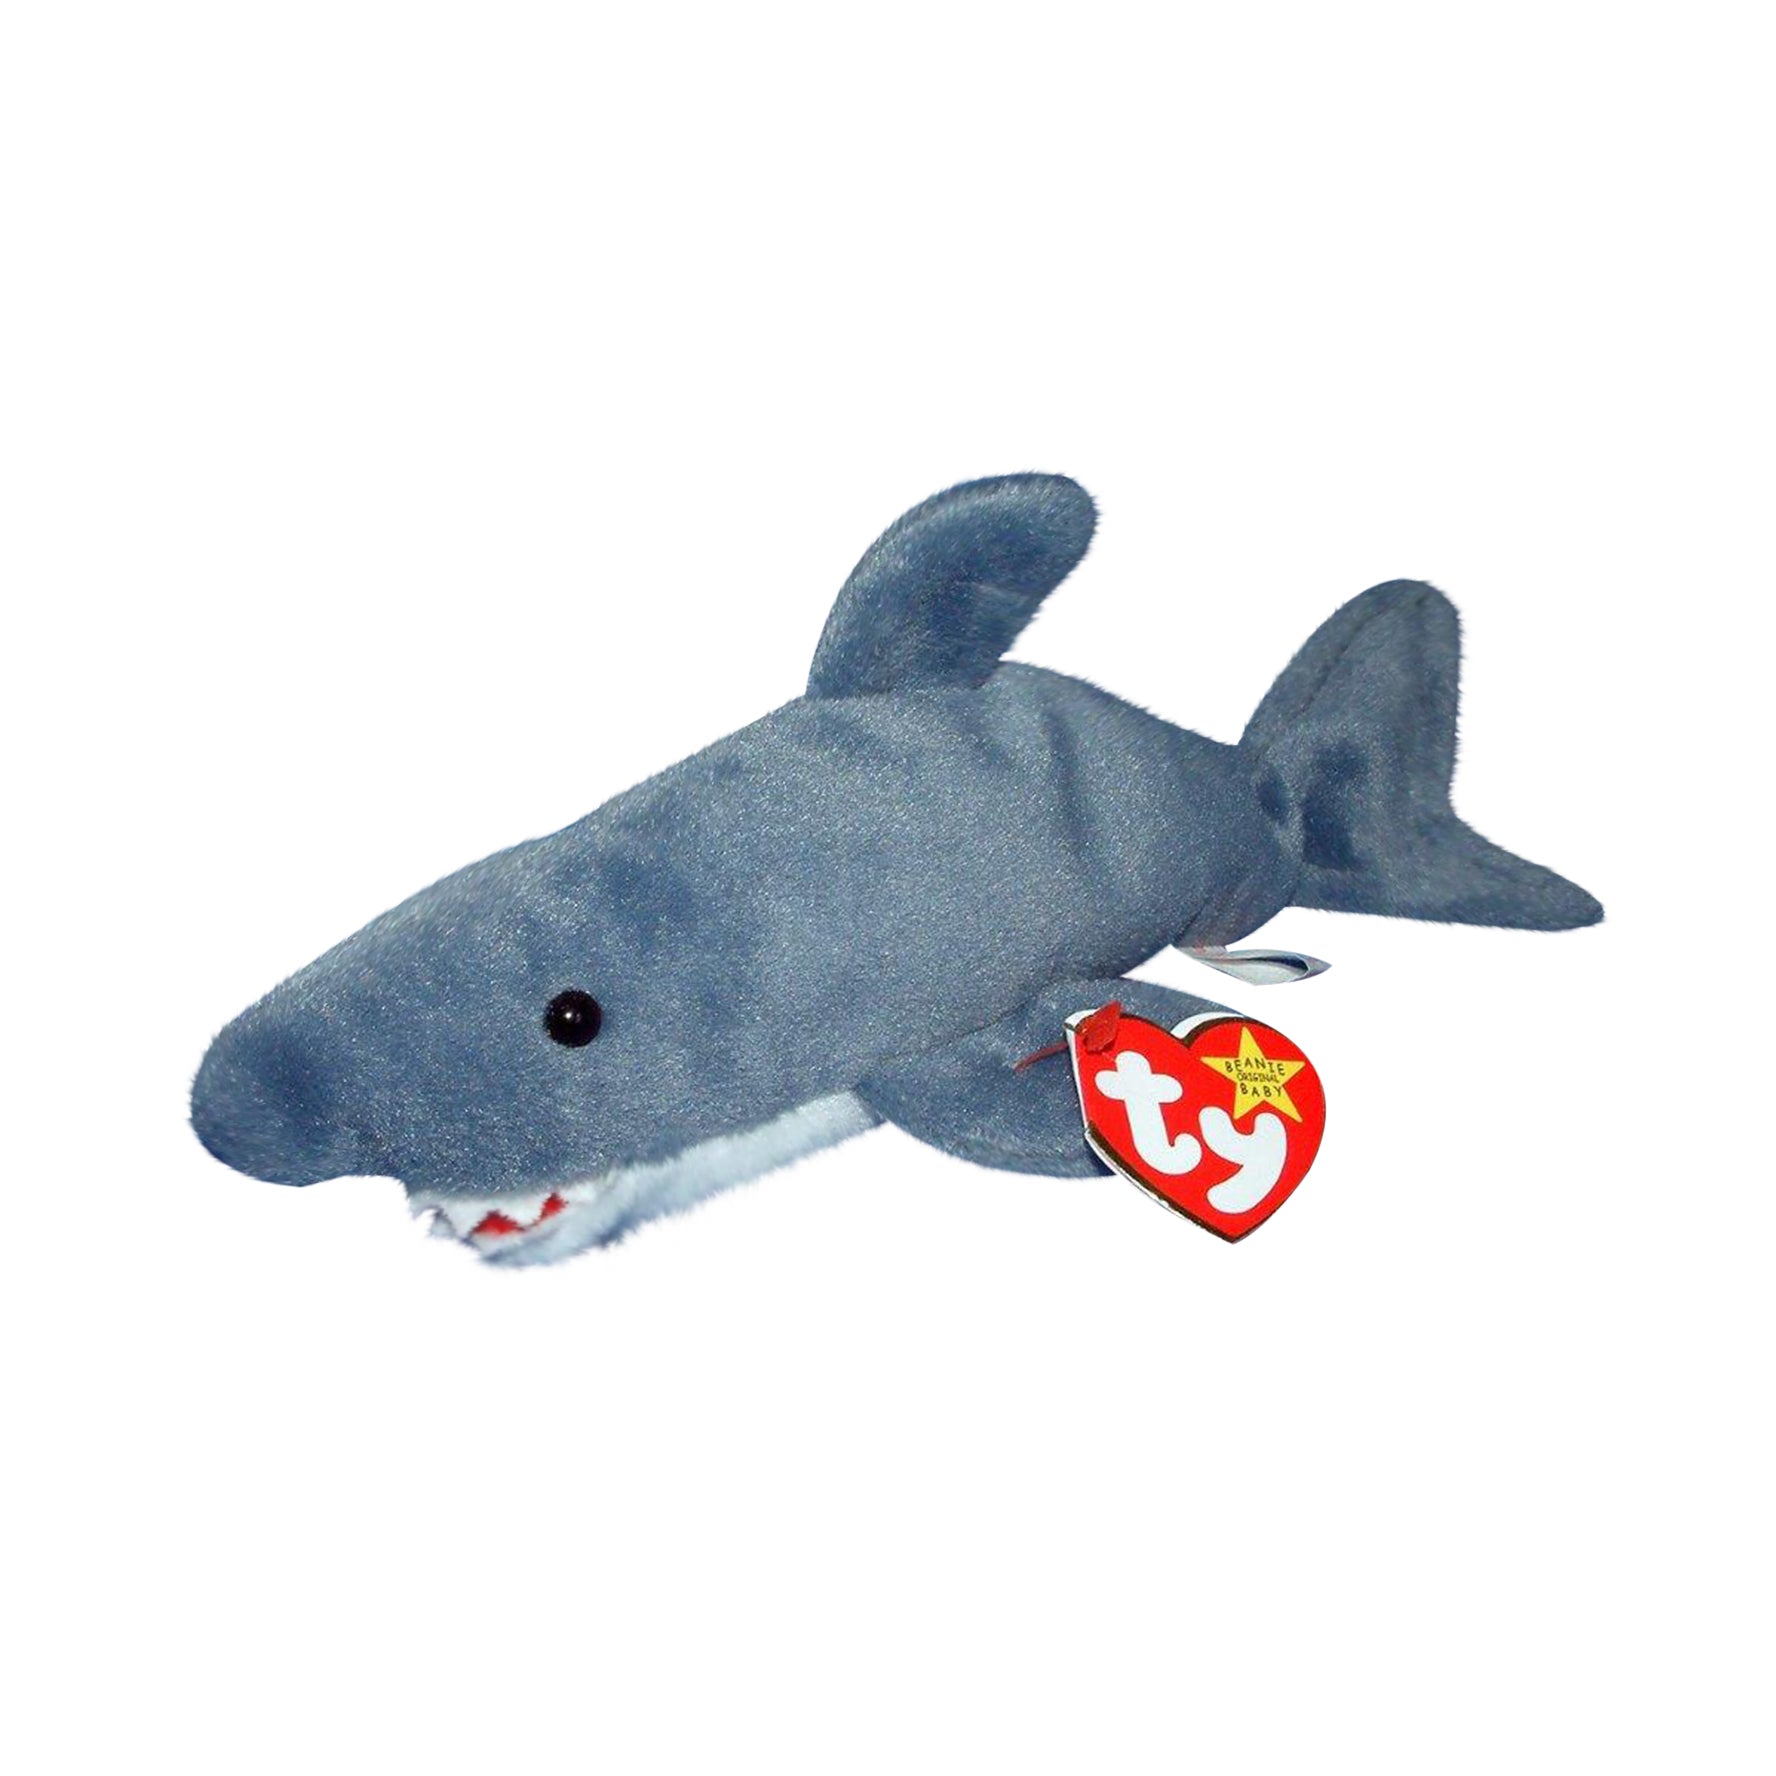 Beanie Baby: Crunch the Shark